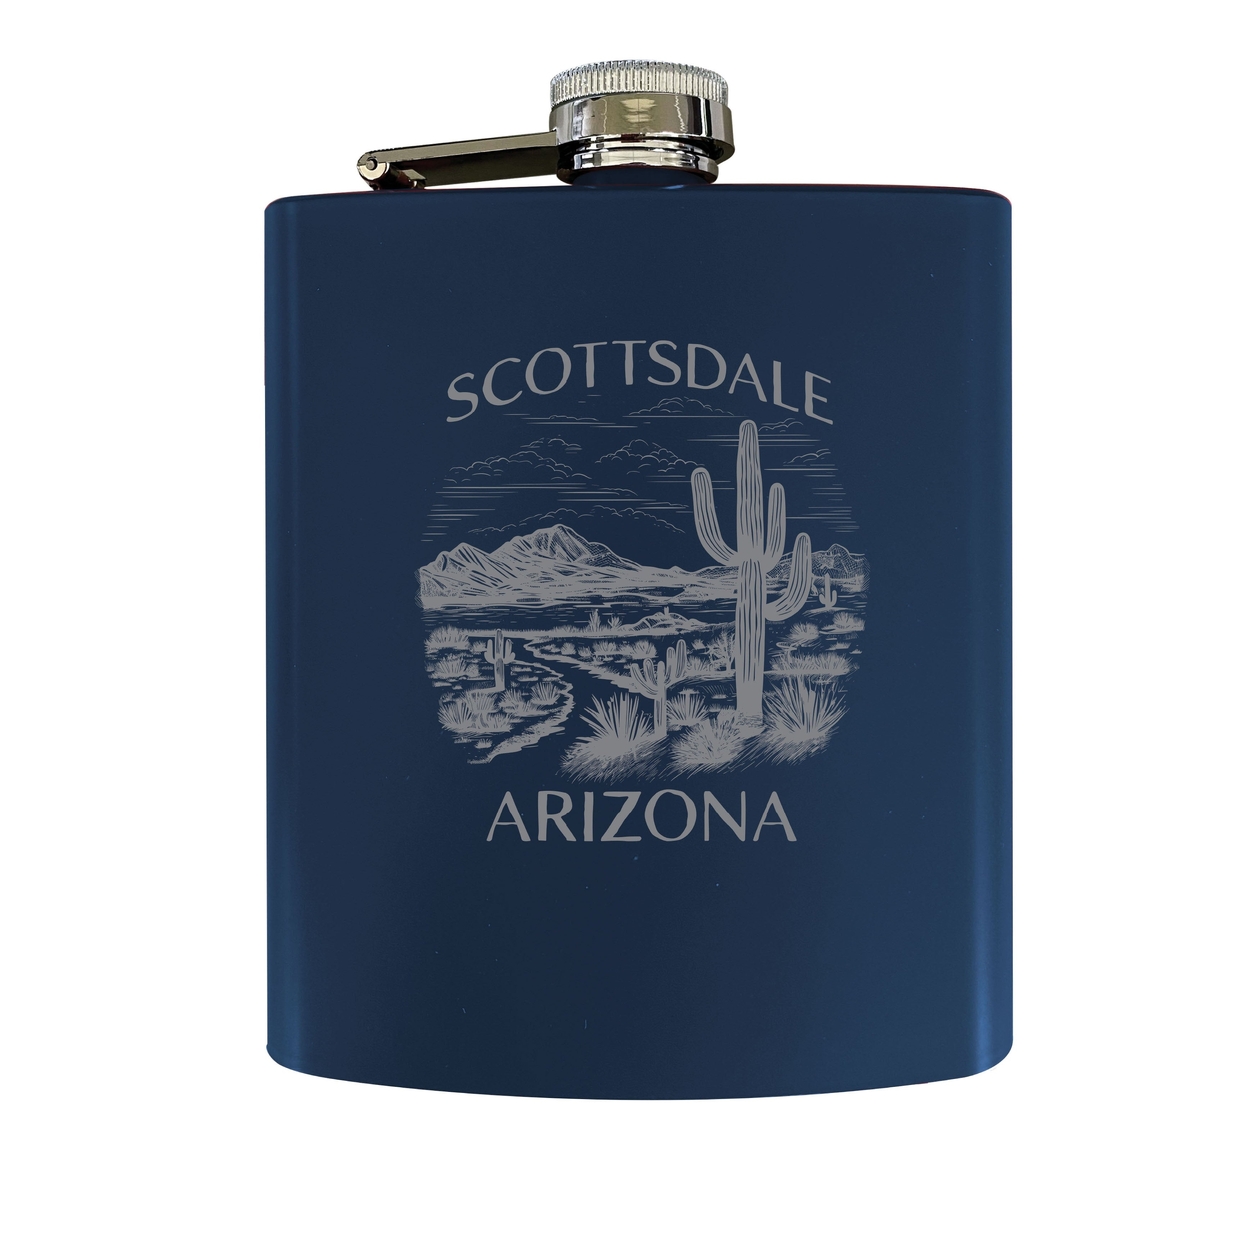 Scottsdale Arizona Souvenir 7 Oz Engraved Steel Flask Matte Finish - Red,,Single Unit